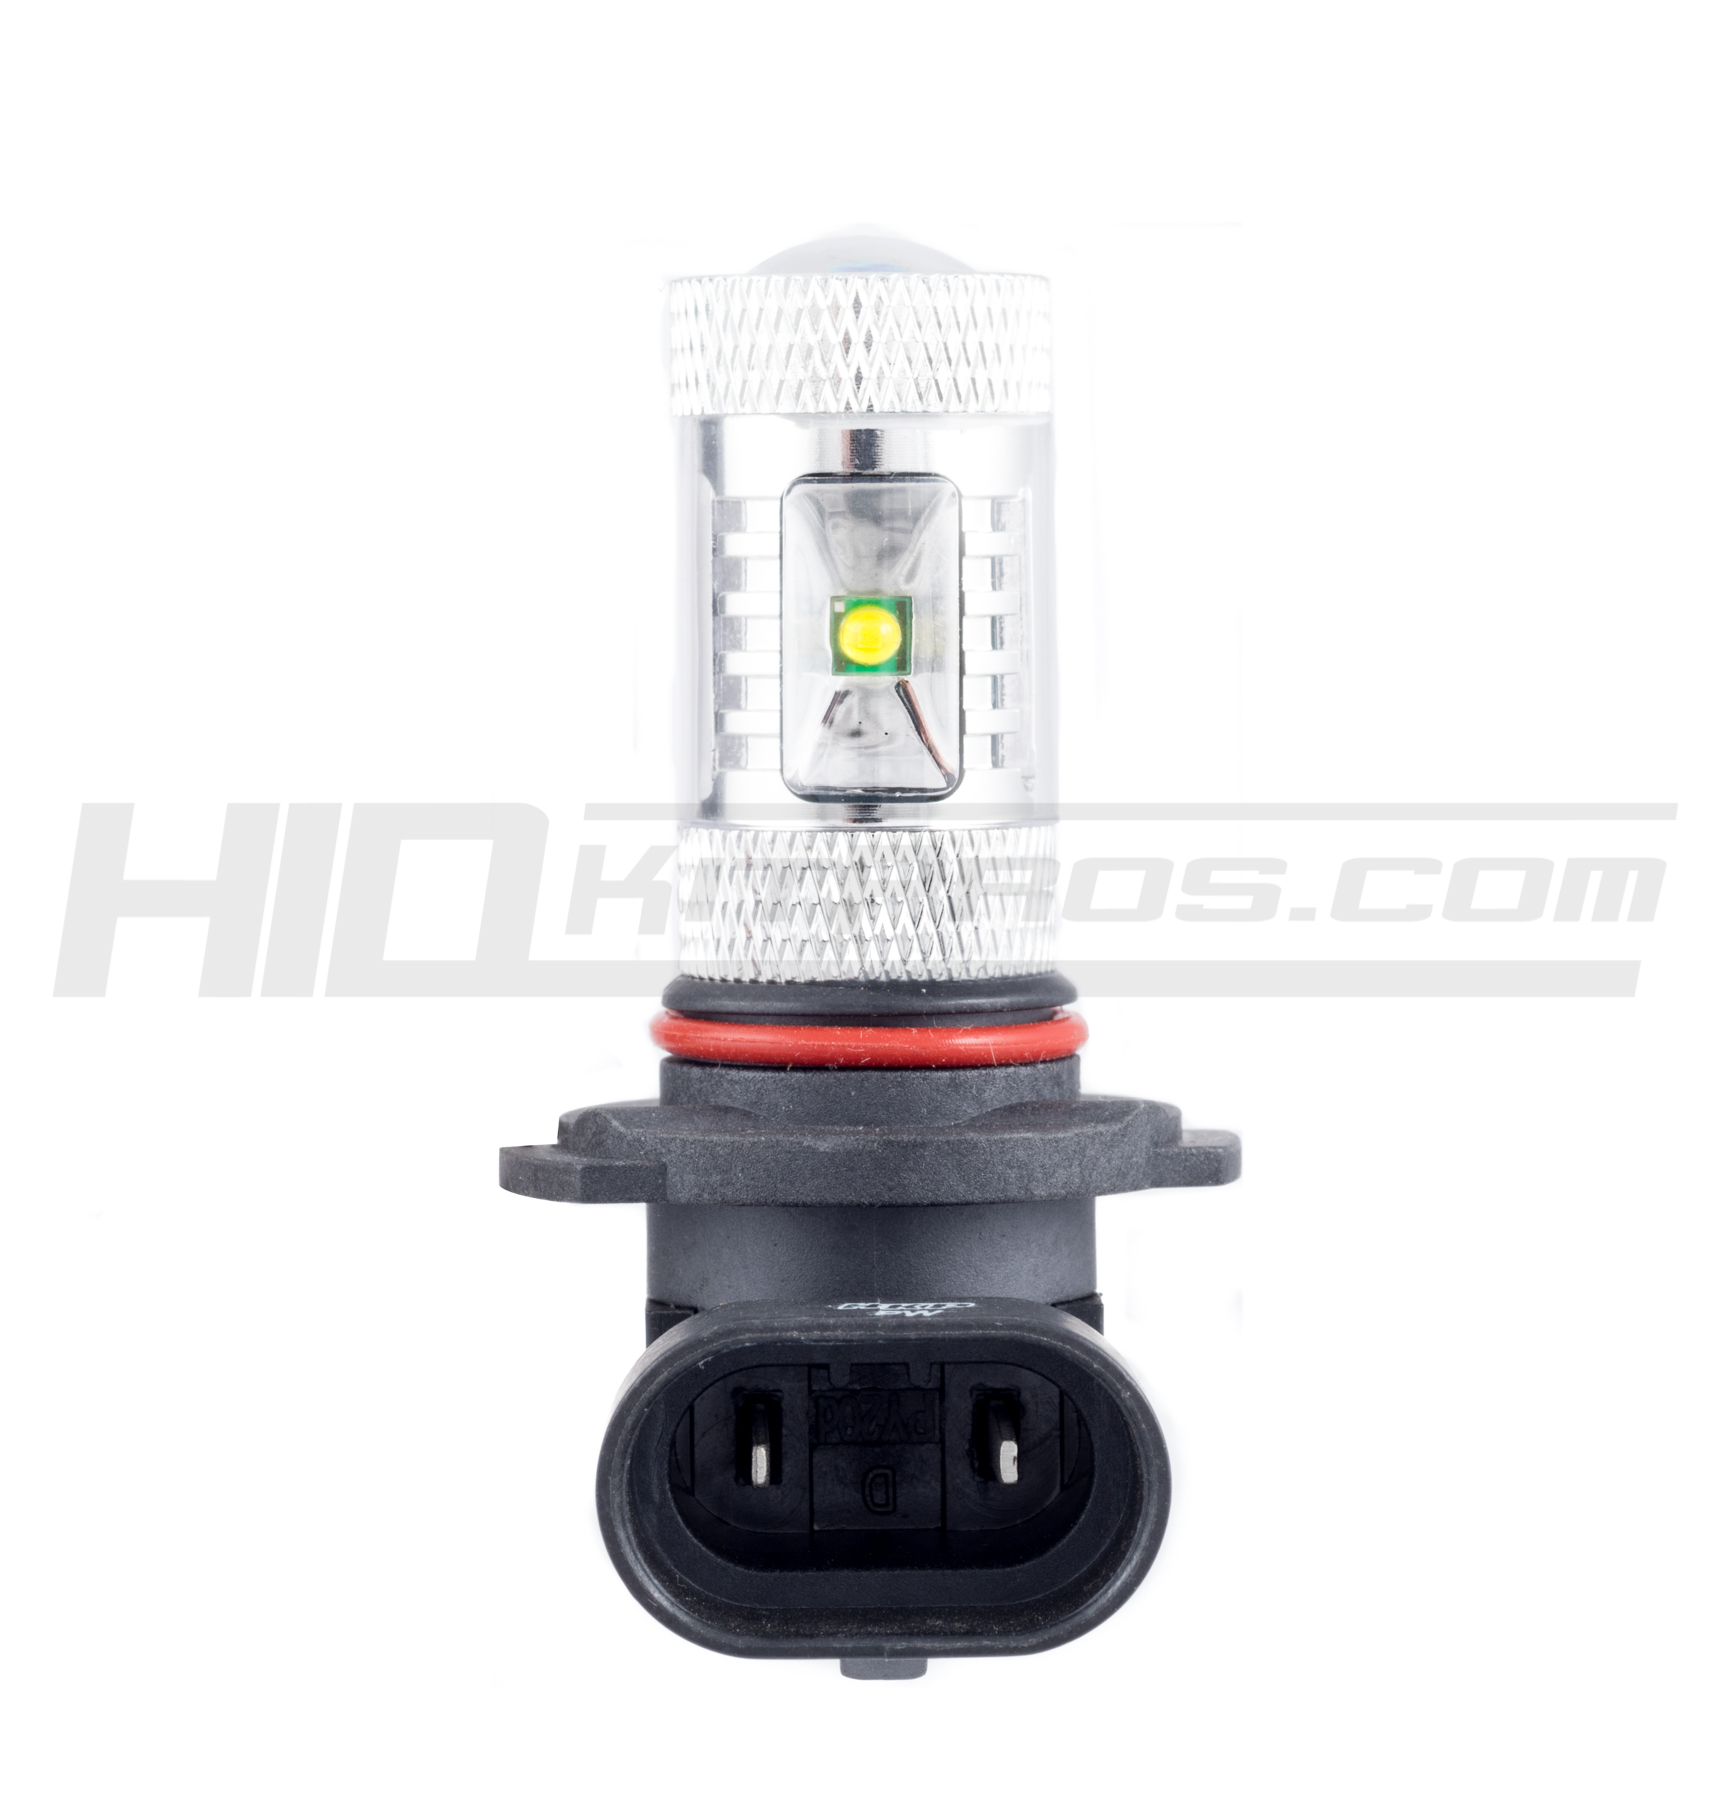 A1 2x H10 9145 LED Plug-N-Play High Power Conversion Fog Light Kit Pure White 